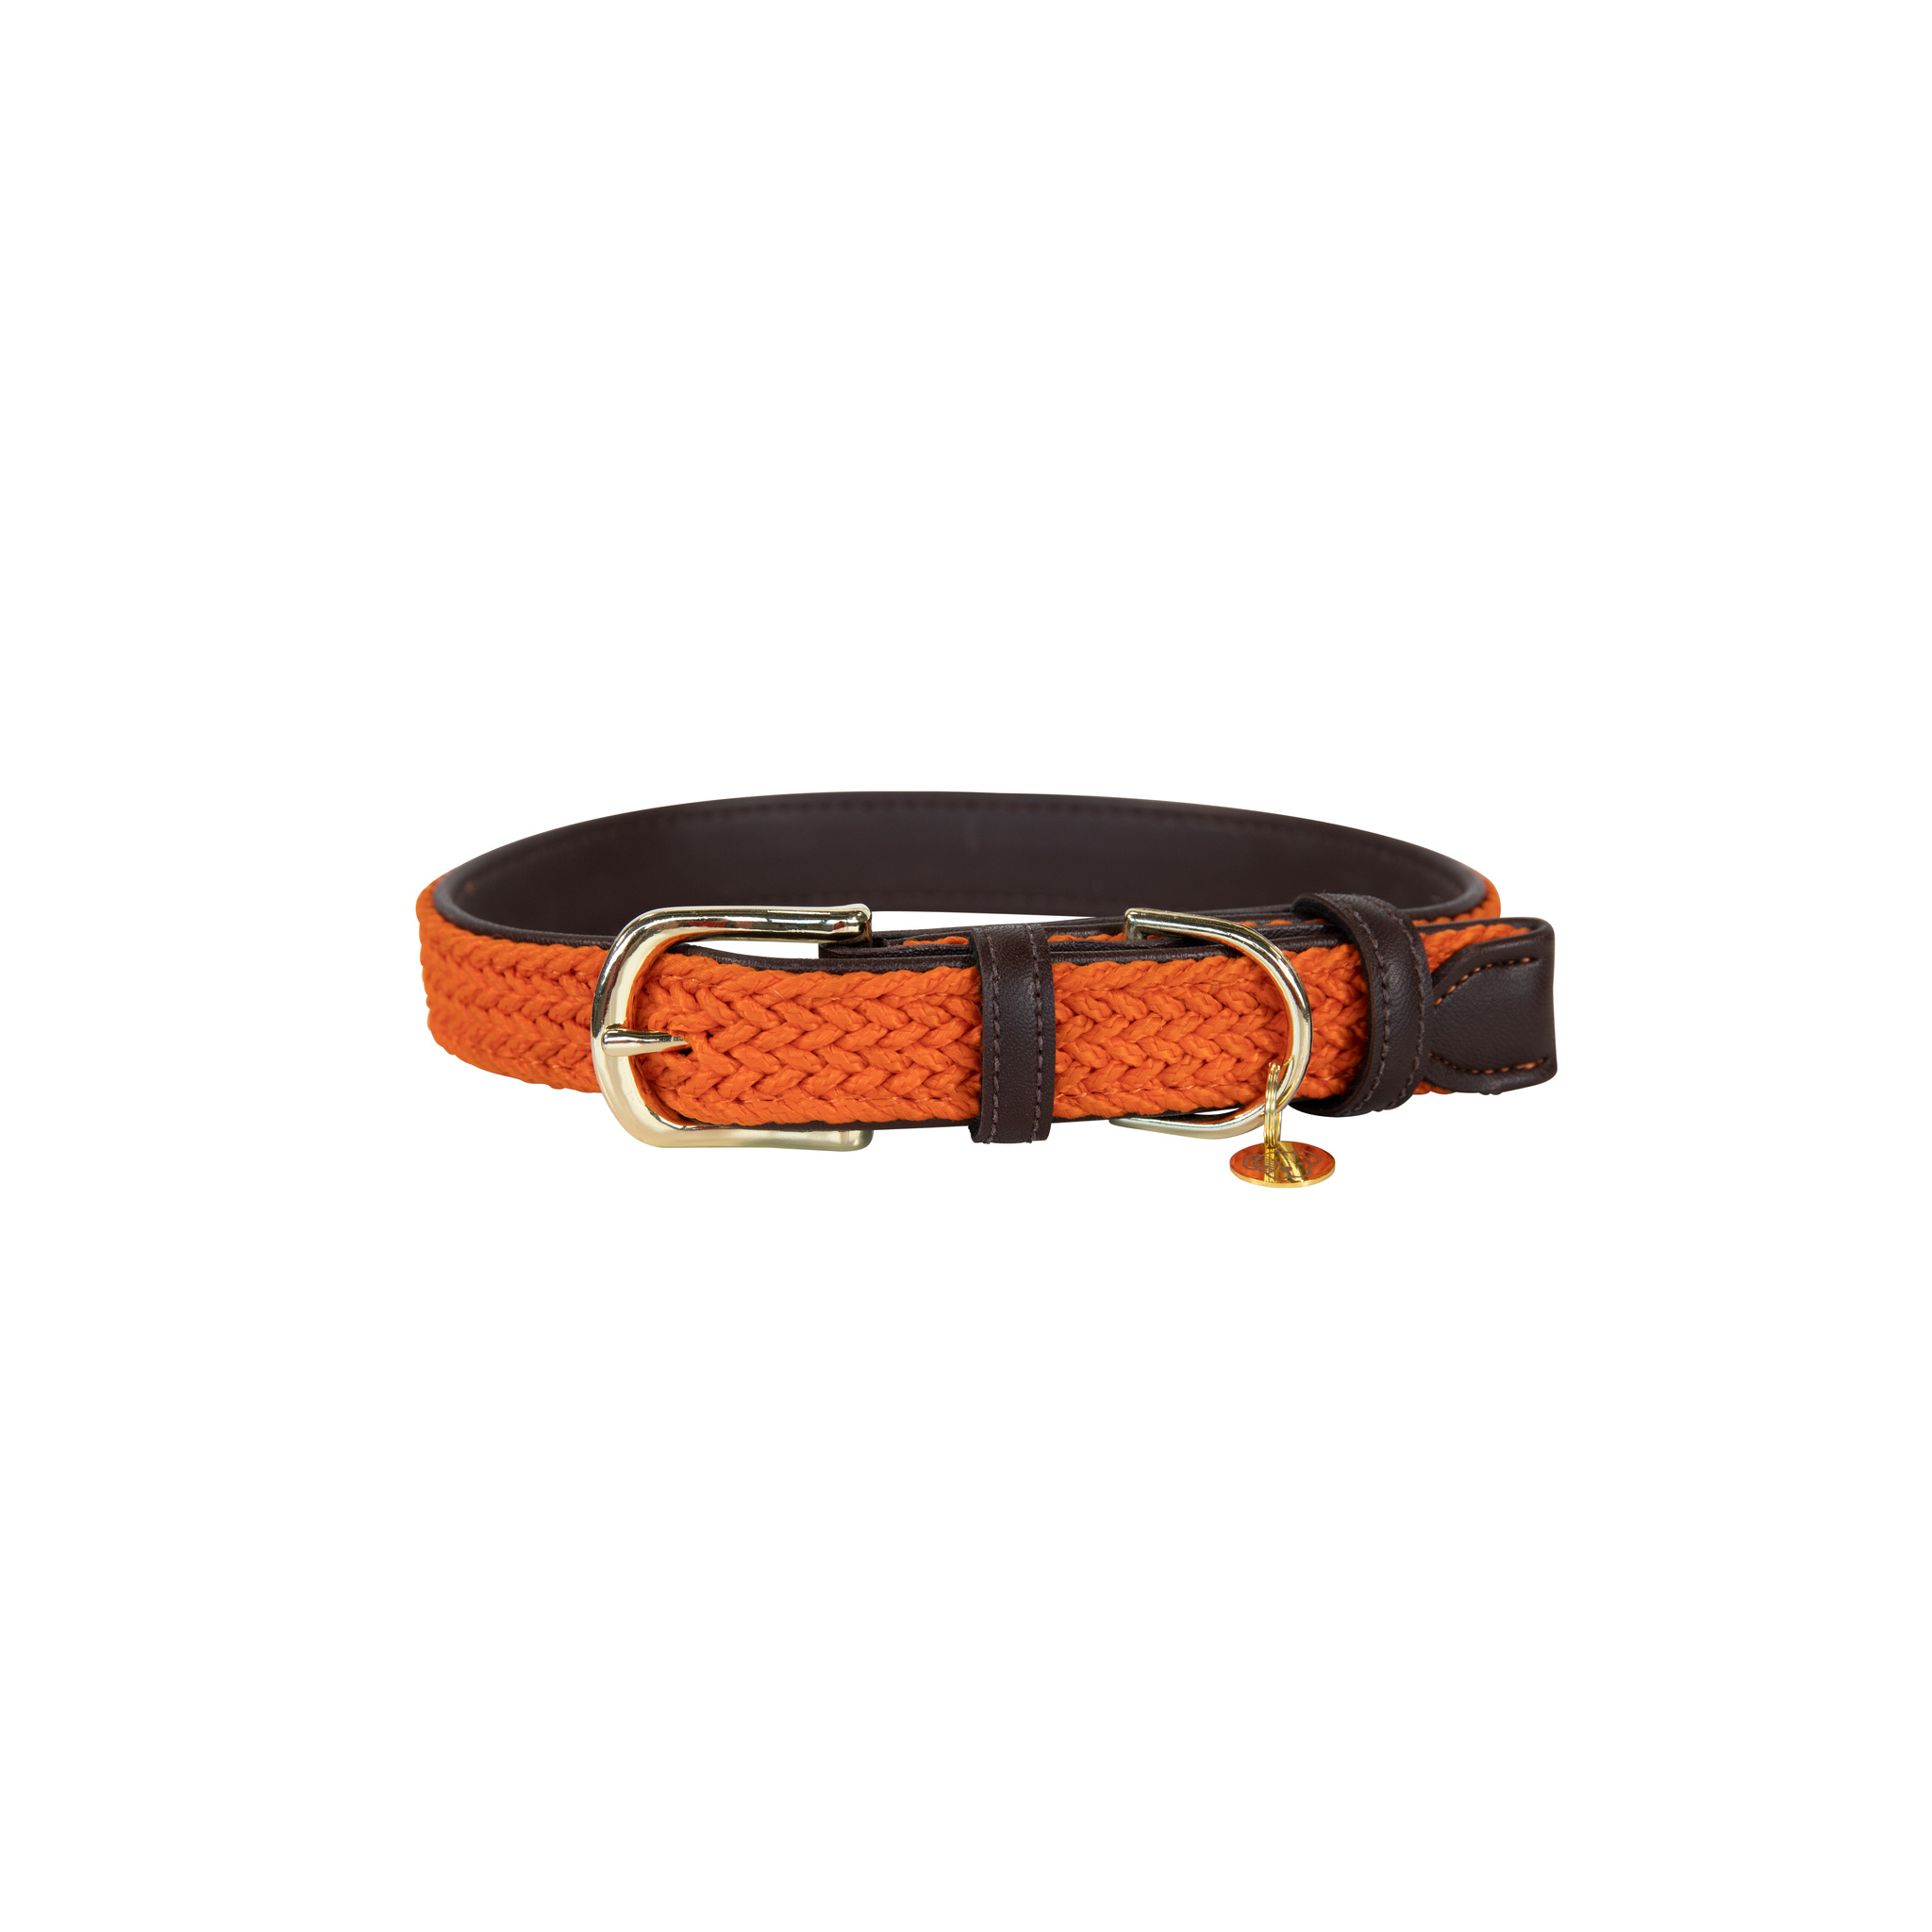 KENTUCKY Hundehalsband Nylon geflochten - orange - XS - 8